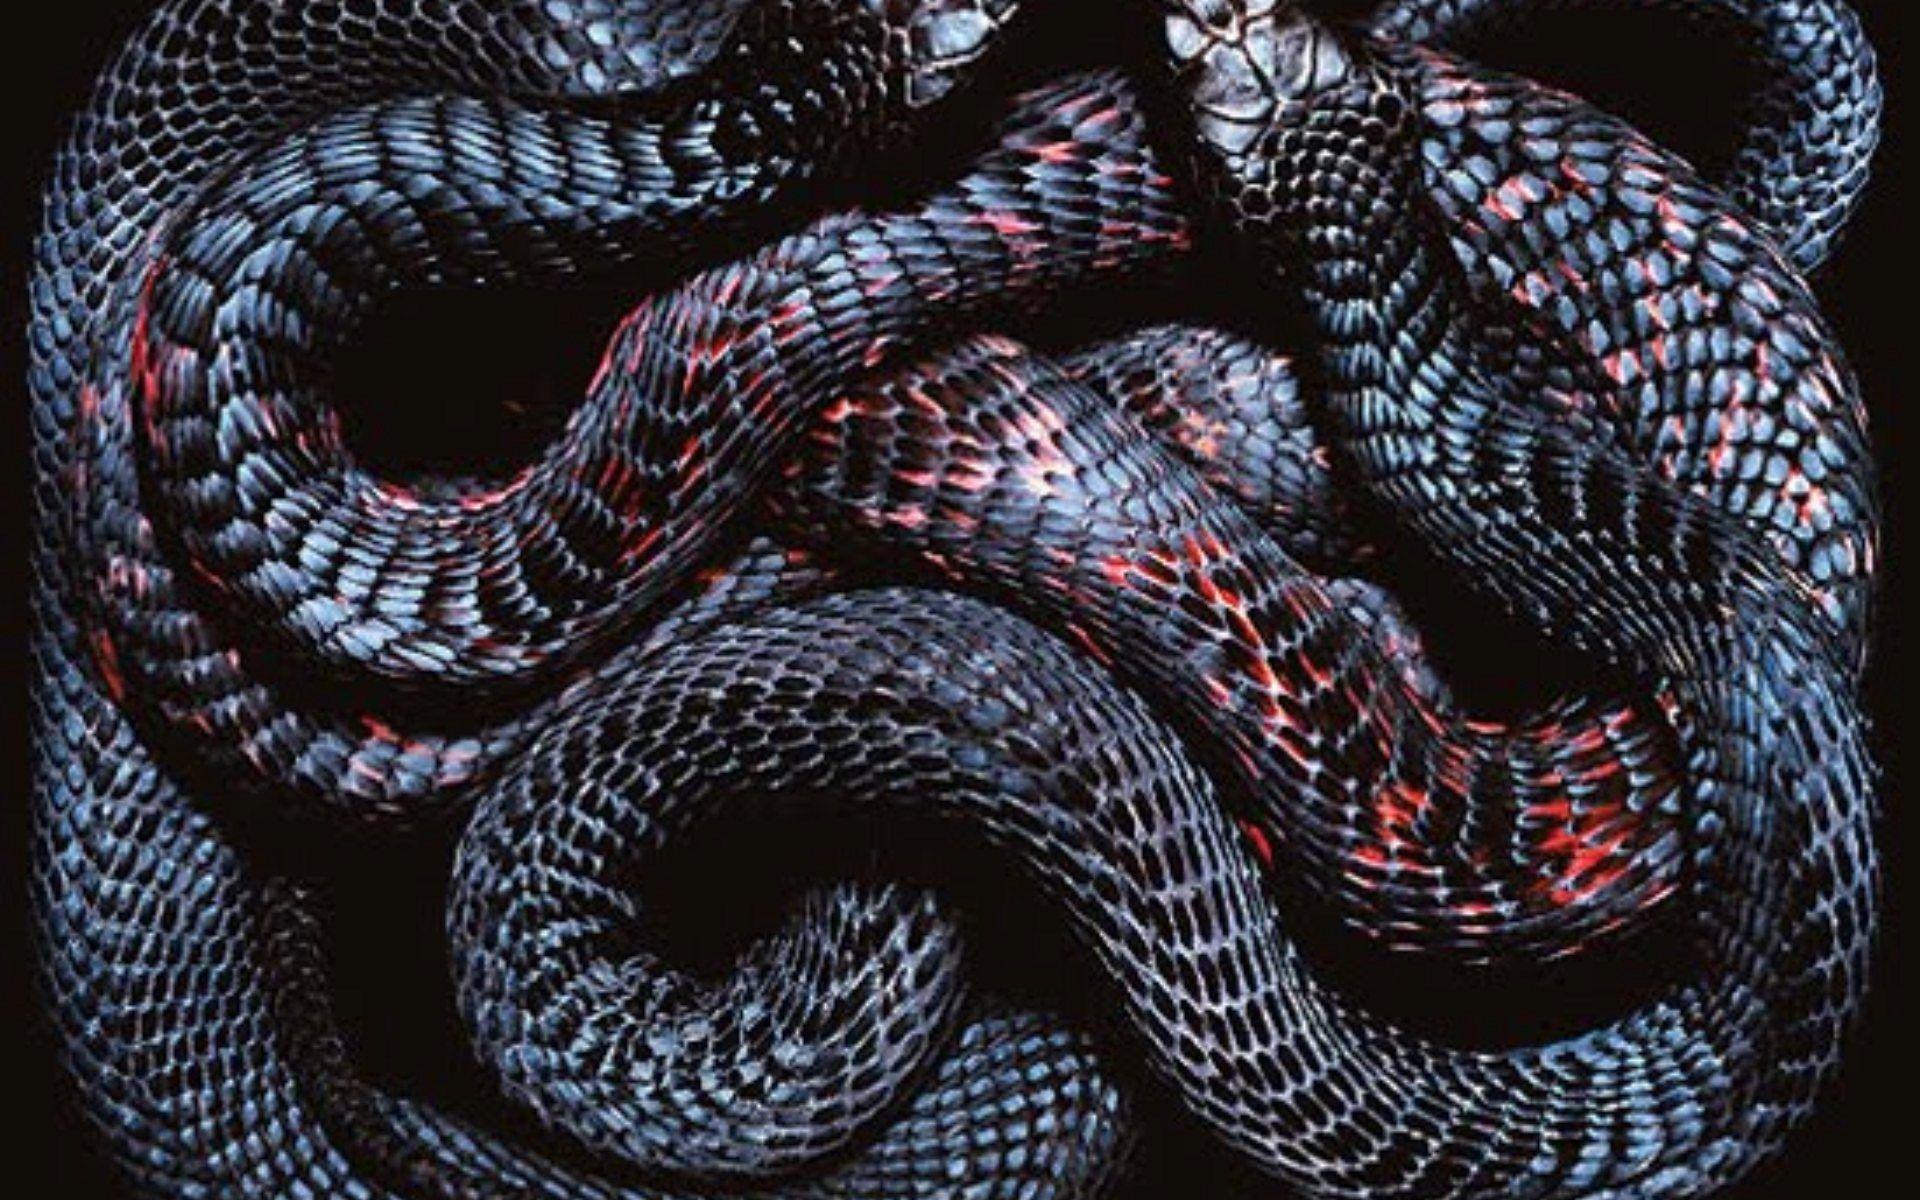  Aesthetic  Black Snake  Desktop Wallpapers  Wallpaper  Cave